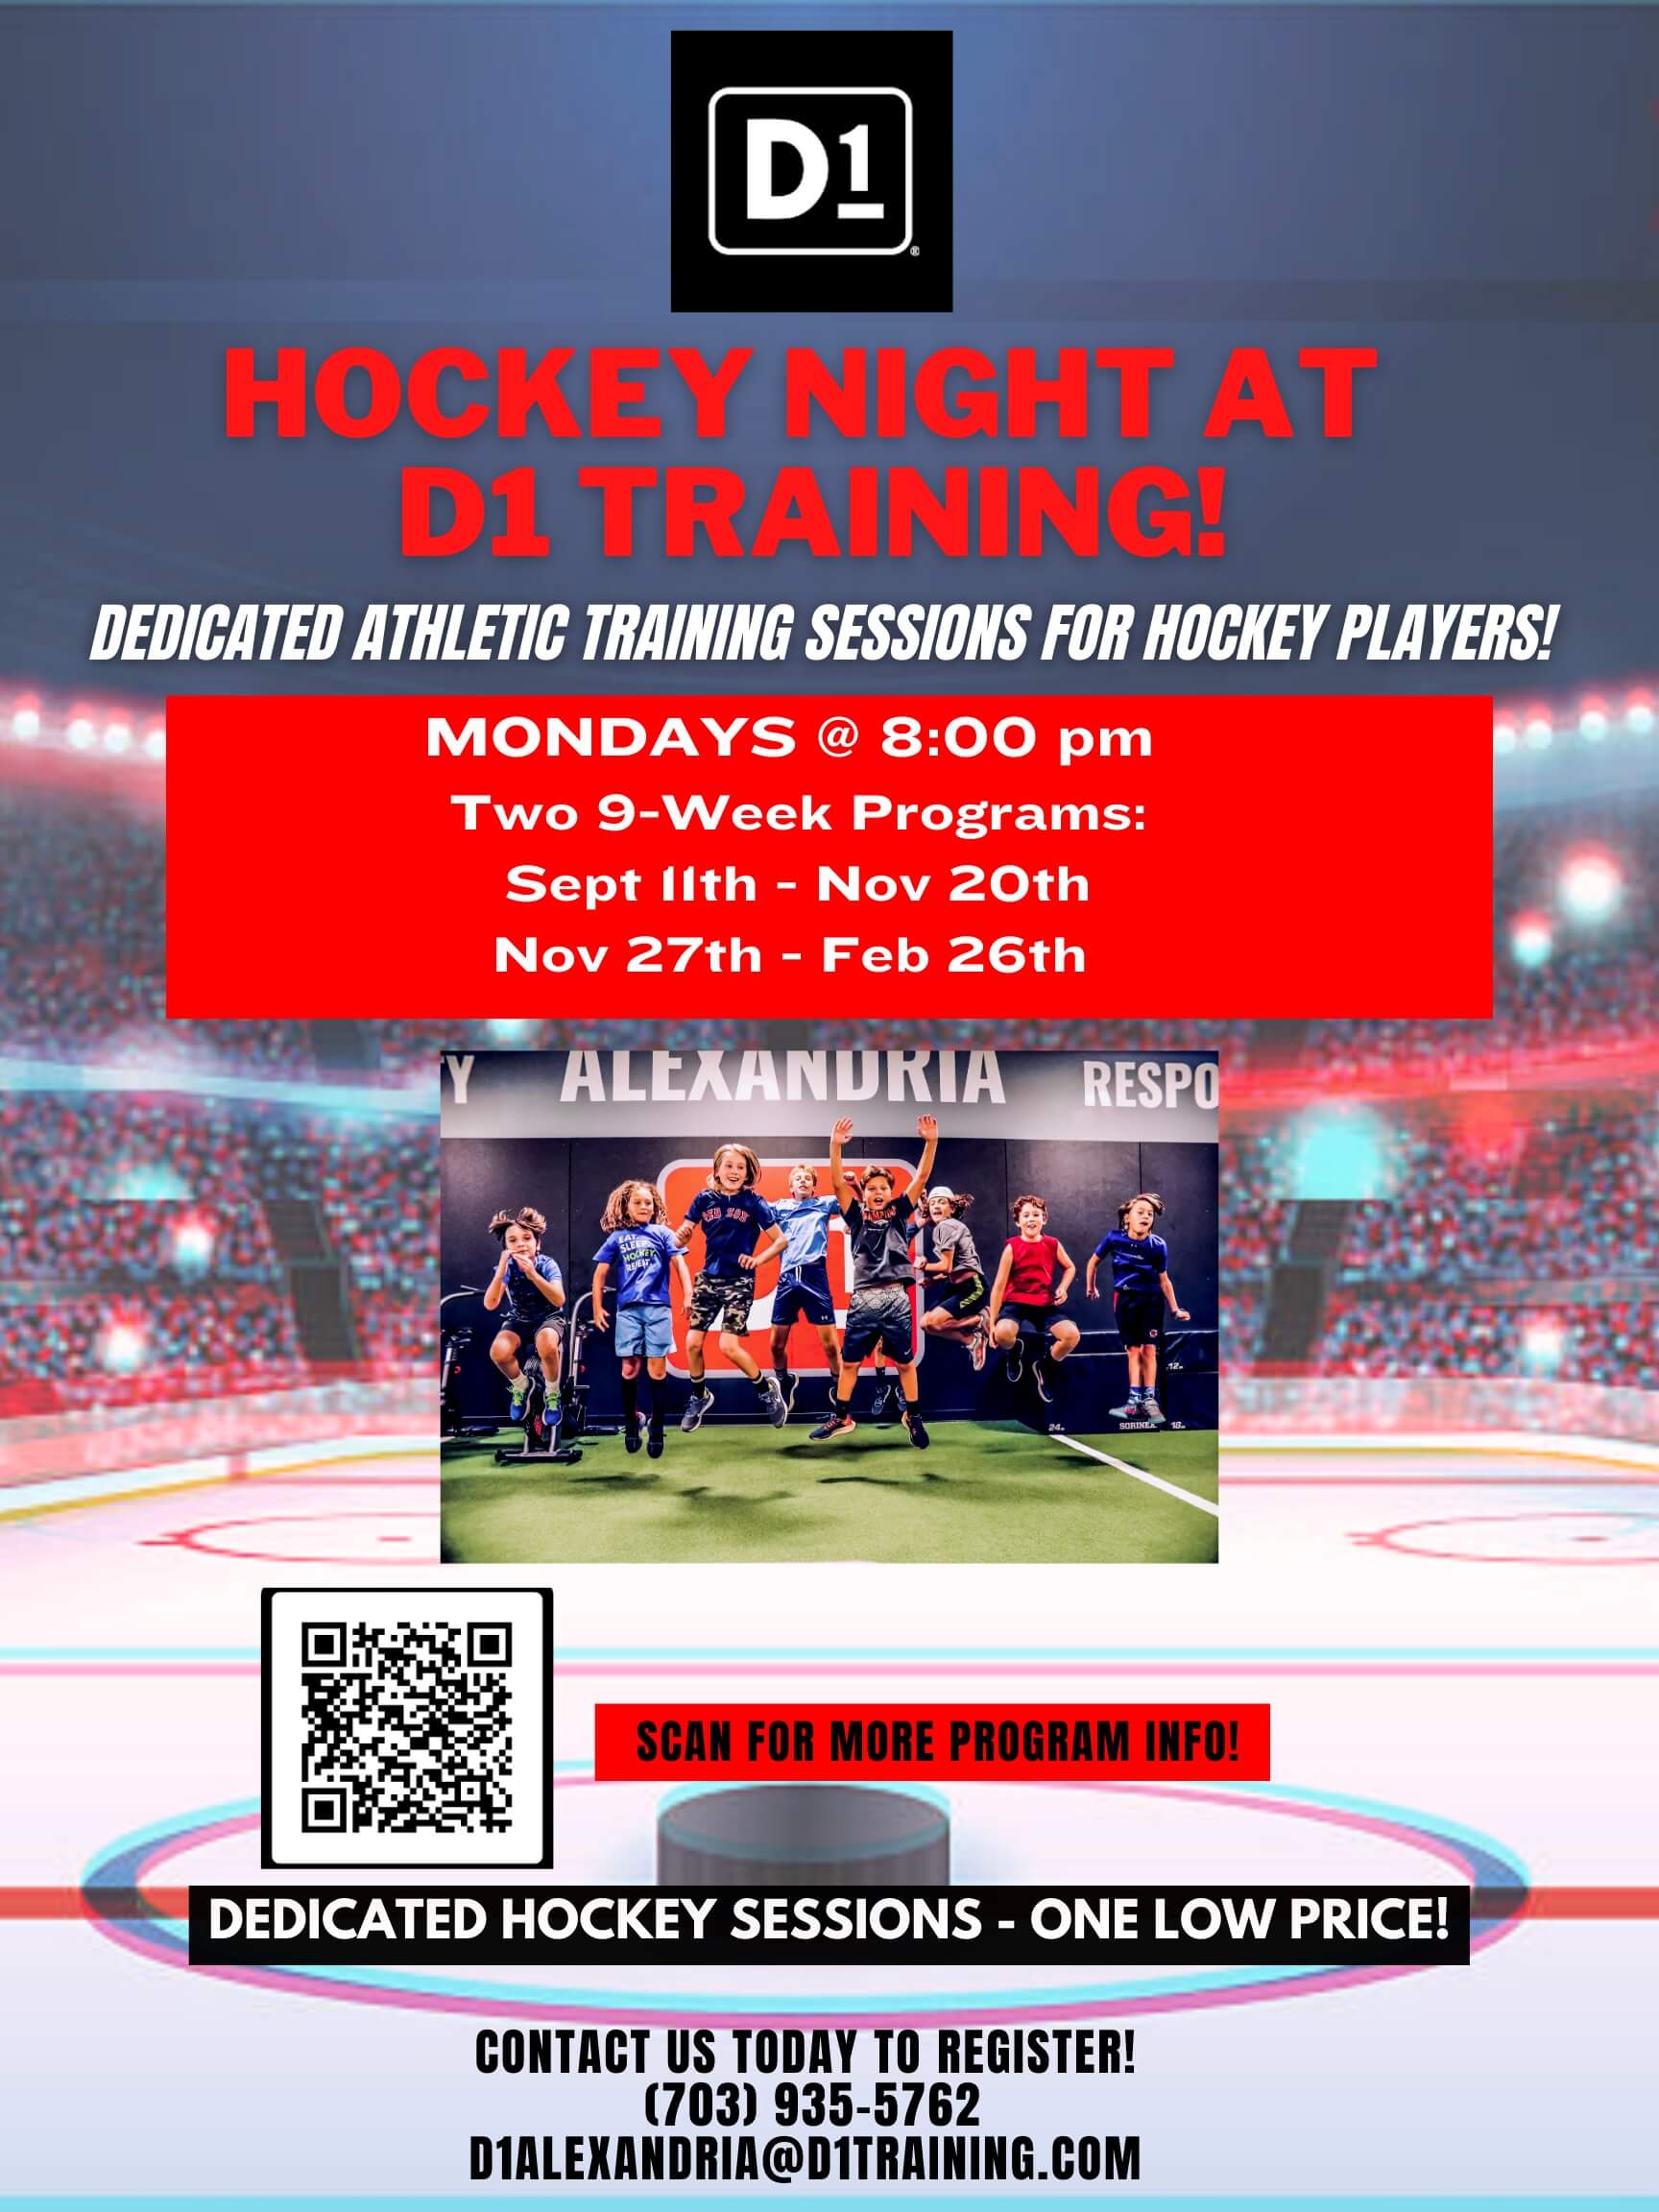 D1 Alexandria Hockey Night Special flyer - Scan QR code for more program info